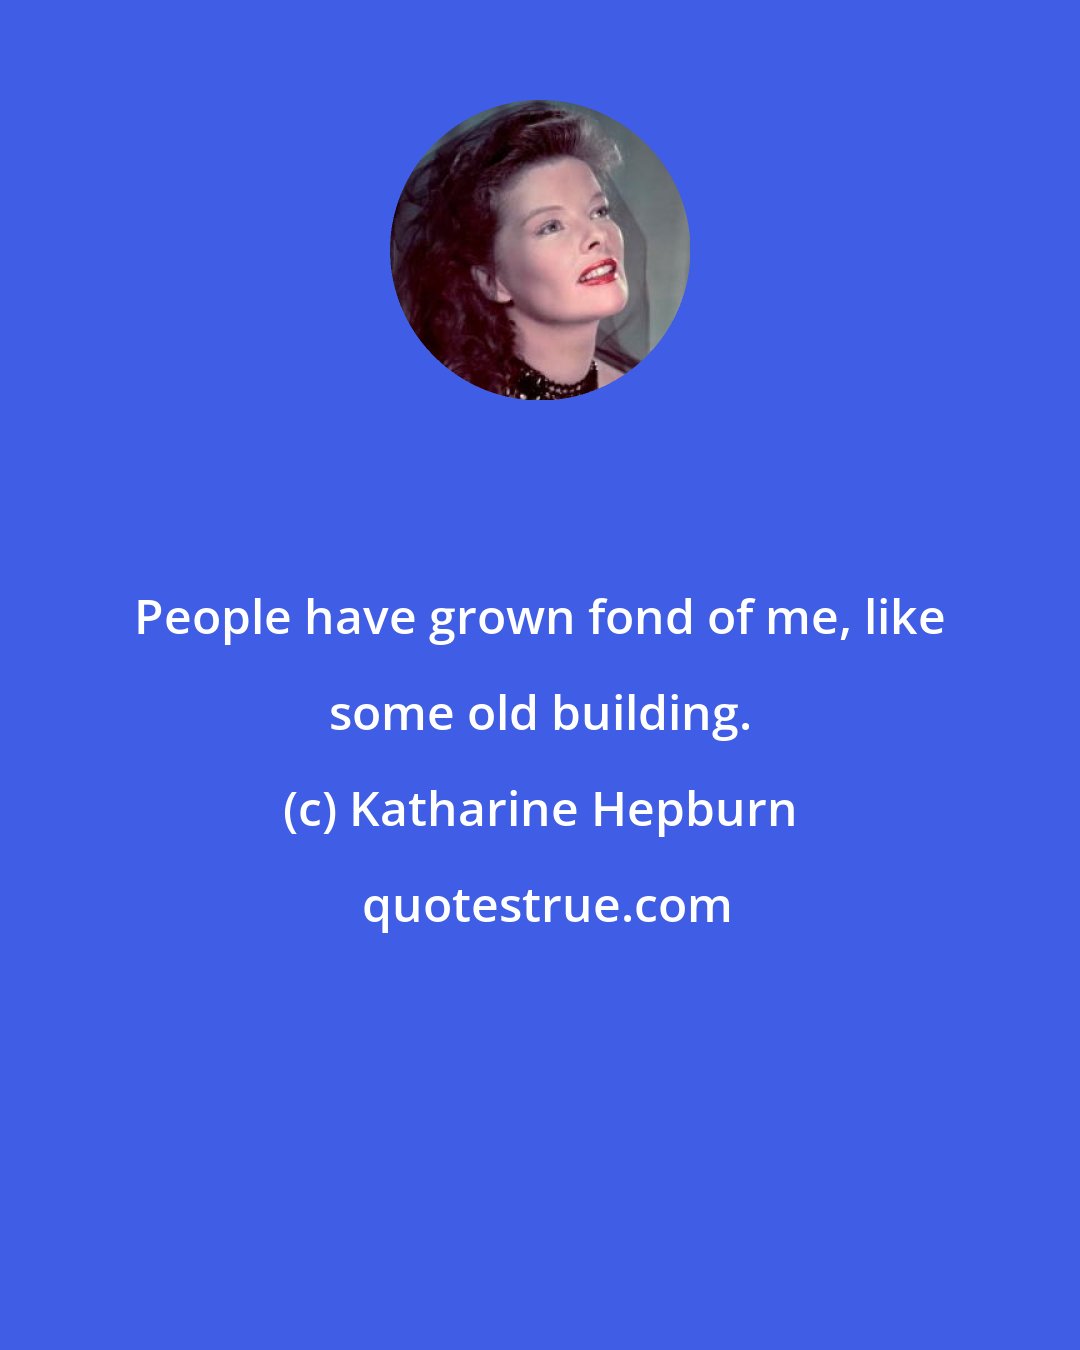 Katharine Hepburn: People have grown fond of me, like some old building.